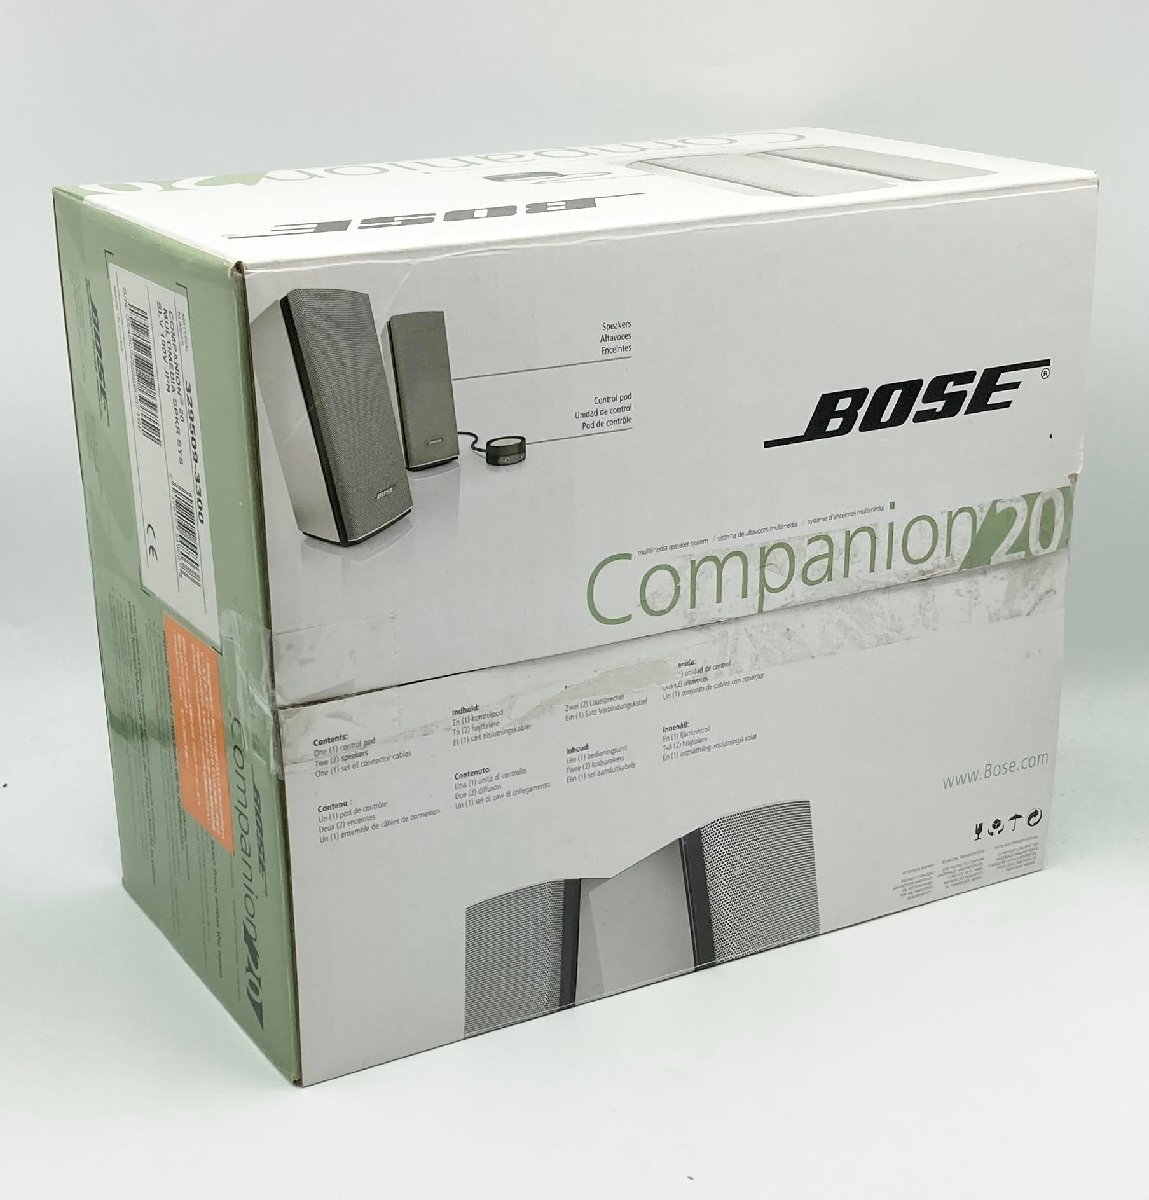 Bose Companion 20 multimedia speaker system PCスピーカー 8.9 cm (W) x 21.9 cm (H) x 11.9 cm (D) 1.13 kg_画像1